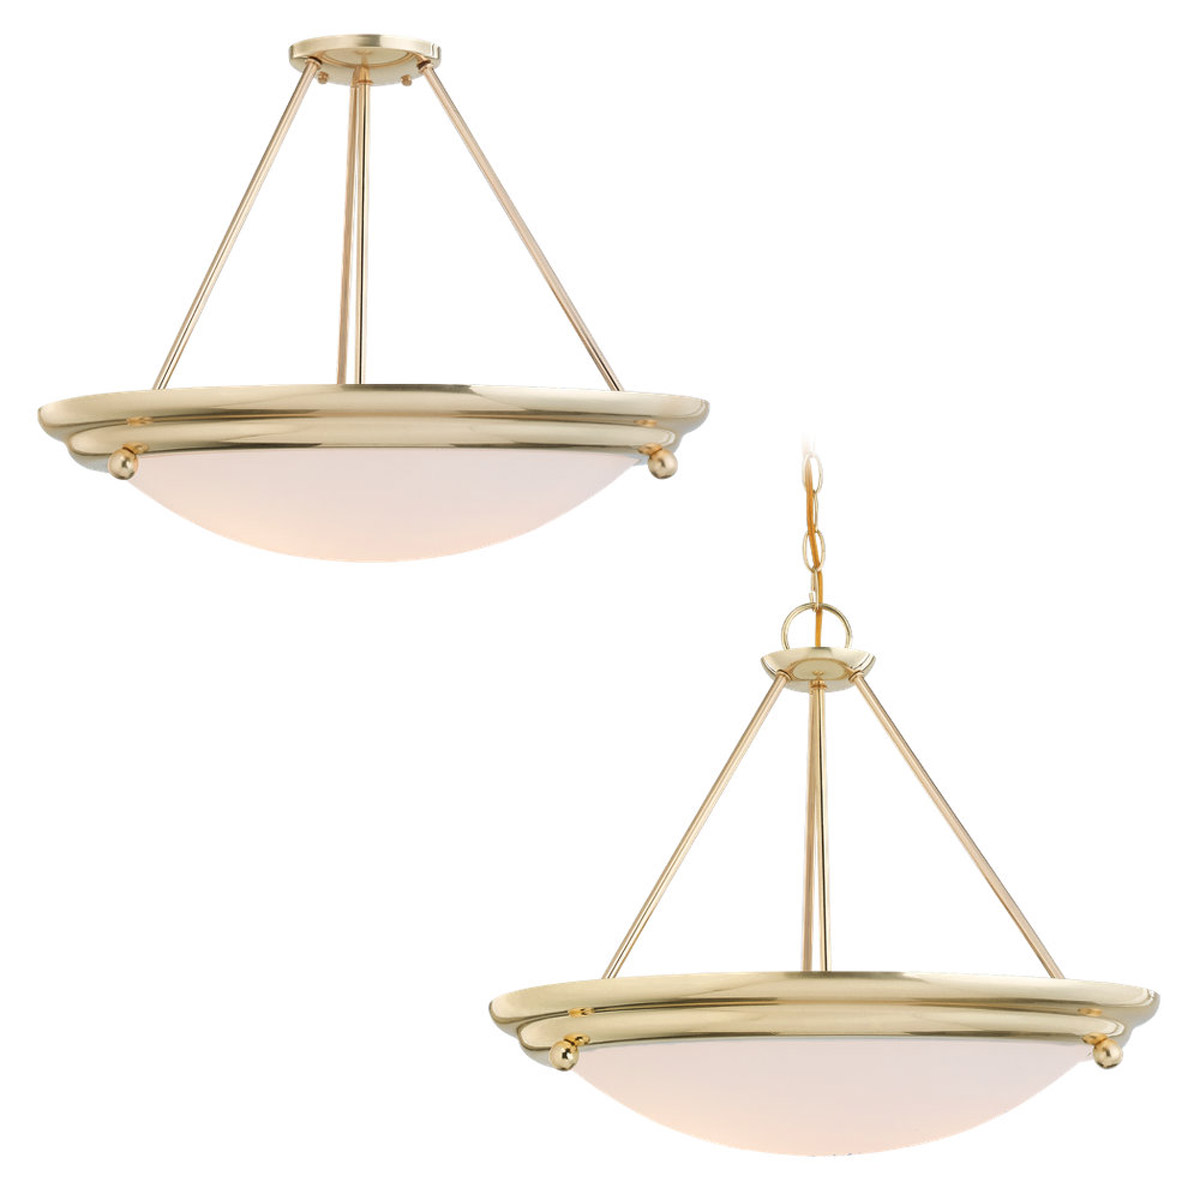 Sea Gull Lighting Centra 3 Light Pendant in Polished Brass 66133-02